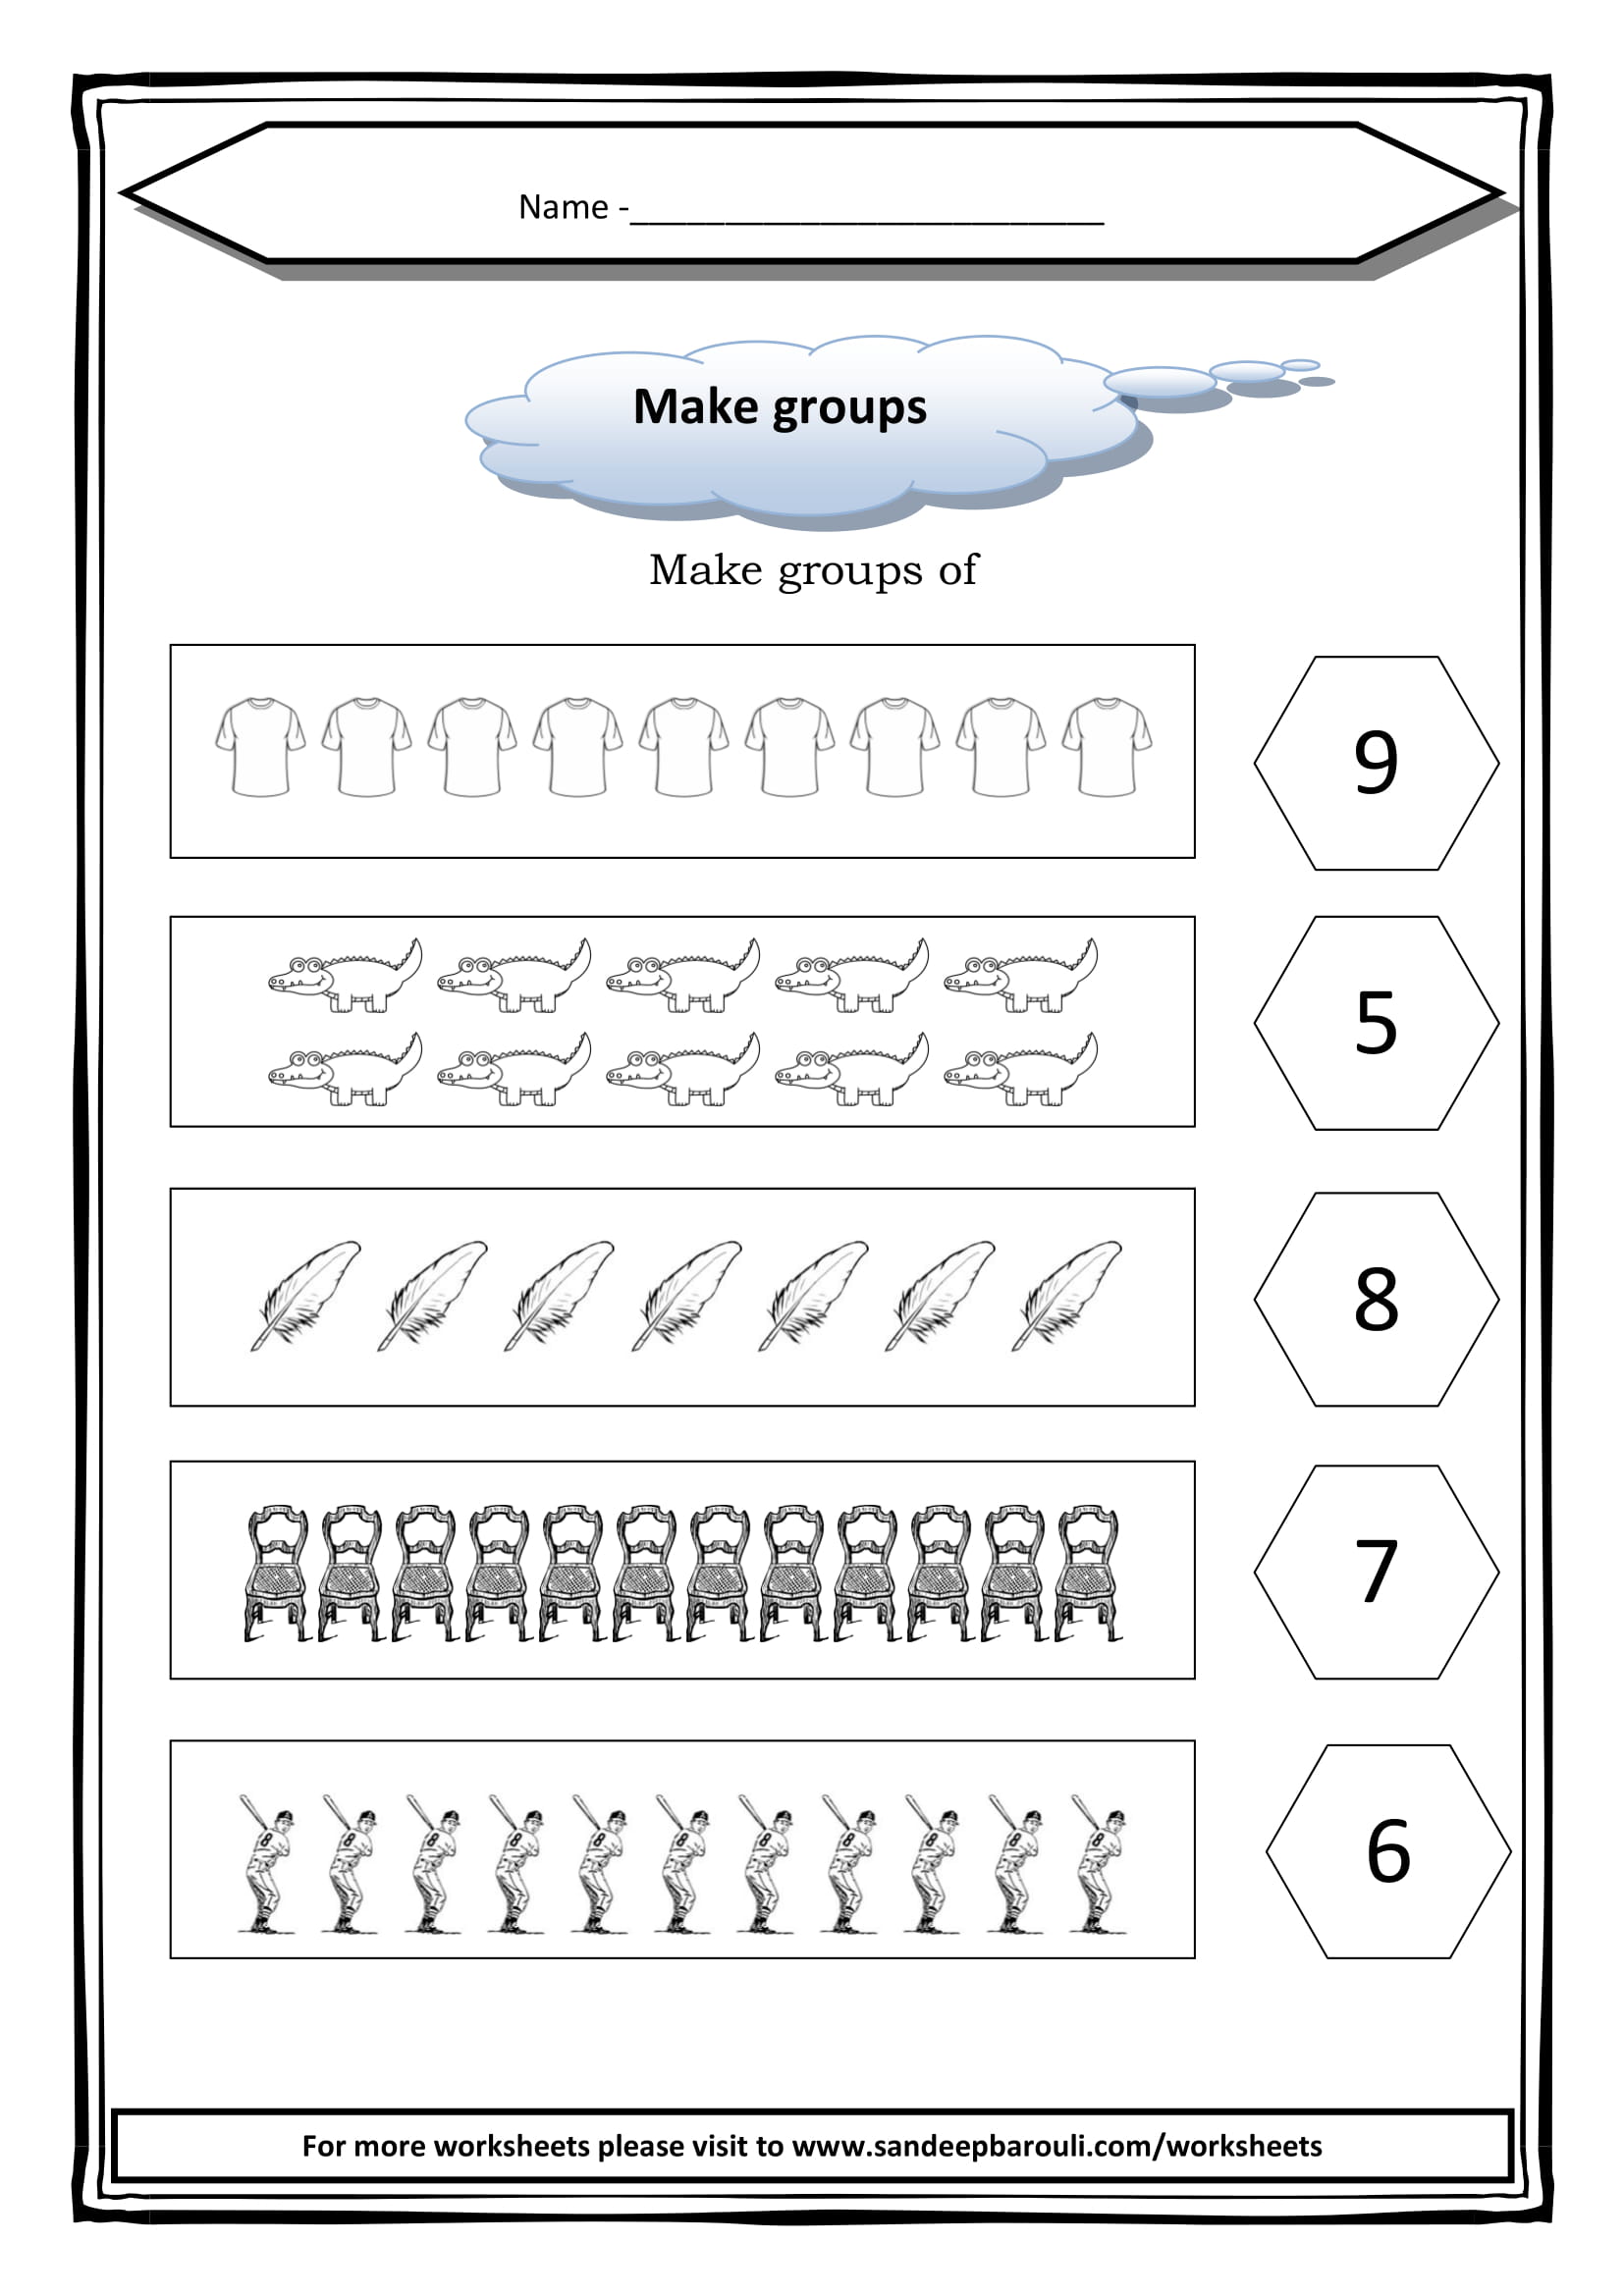 Make-groups-Worksheet-for-class-1